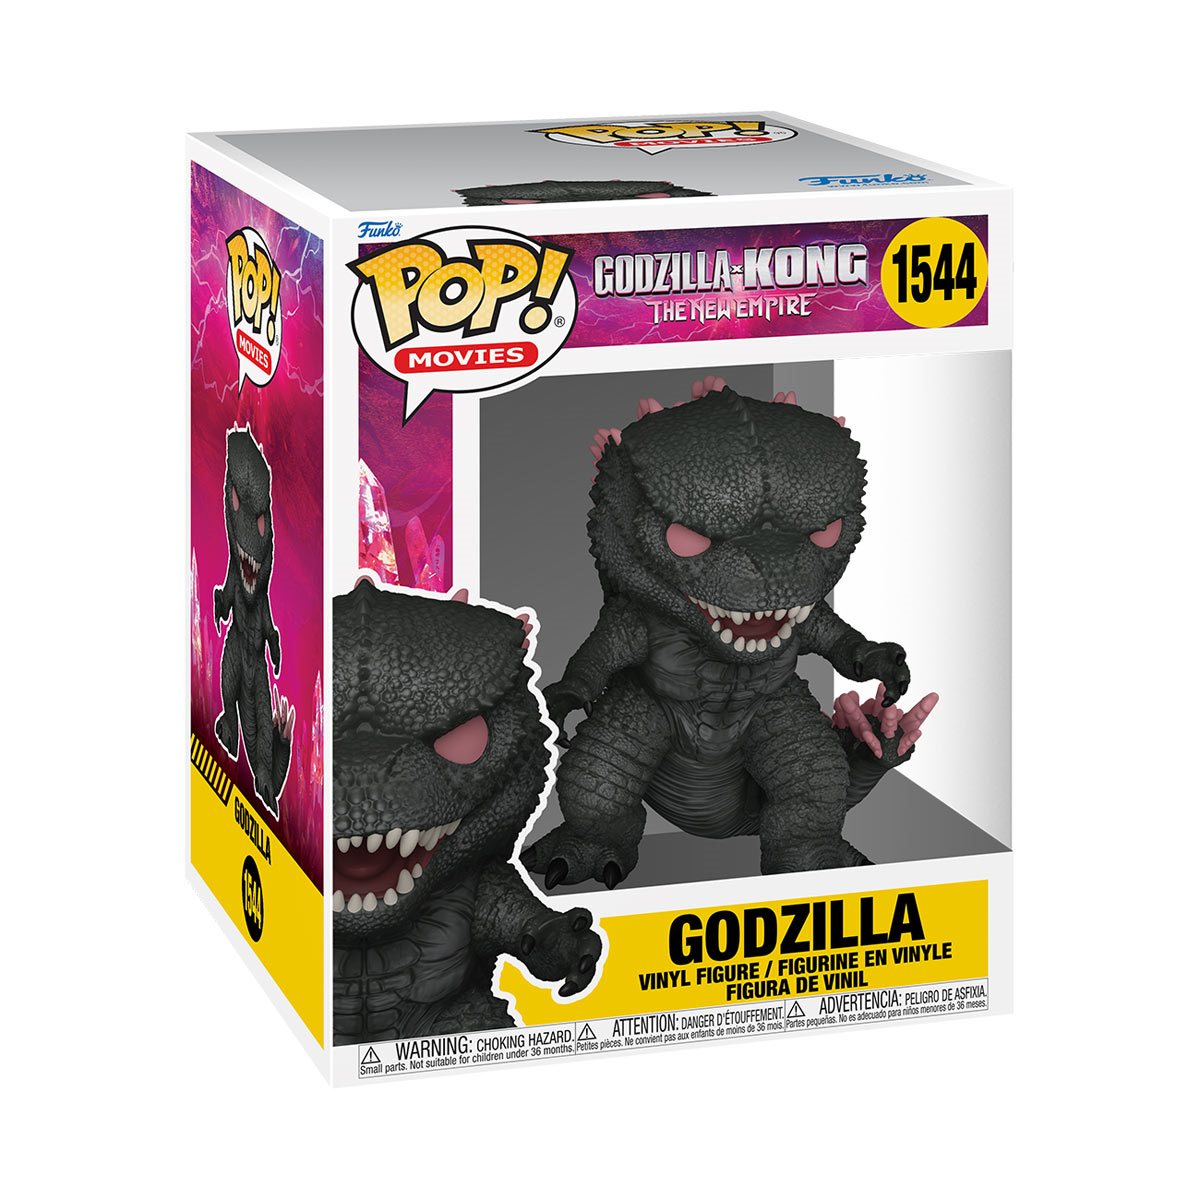 Godzilla x Kong: The New Empire Godzilla Super Funko Pop! Vinyl Figure #1544